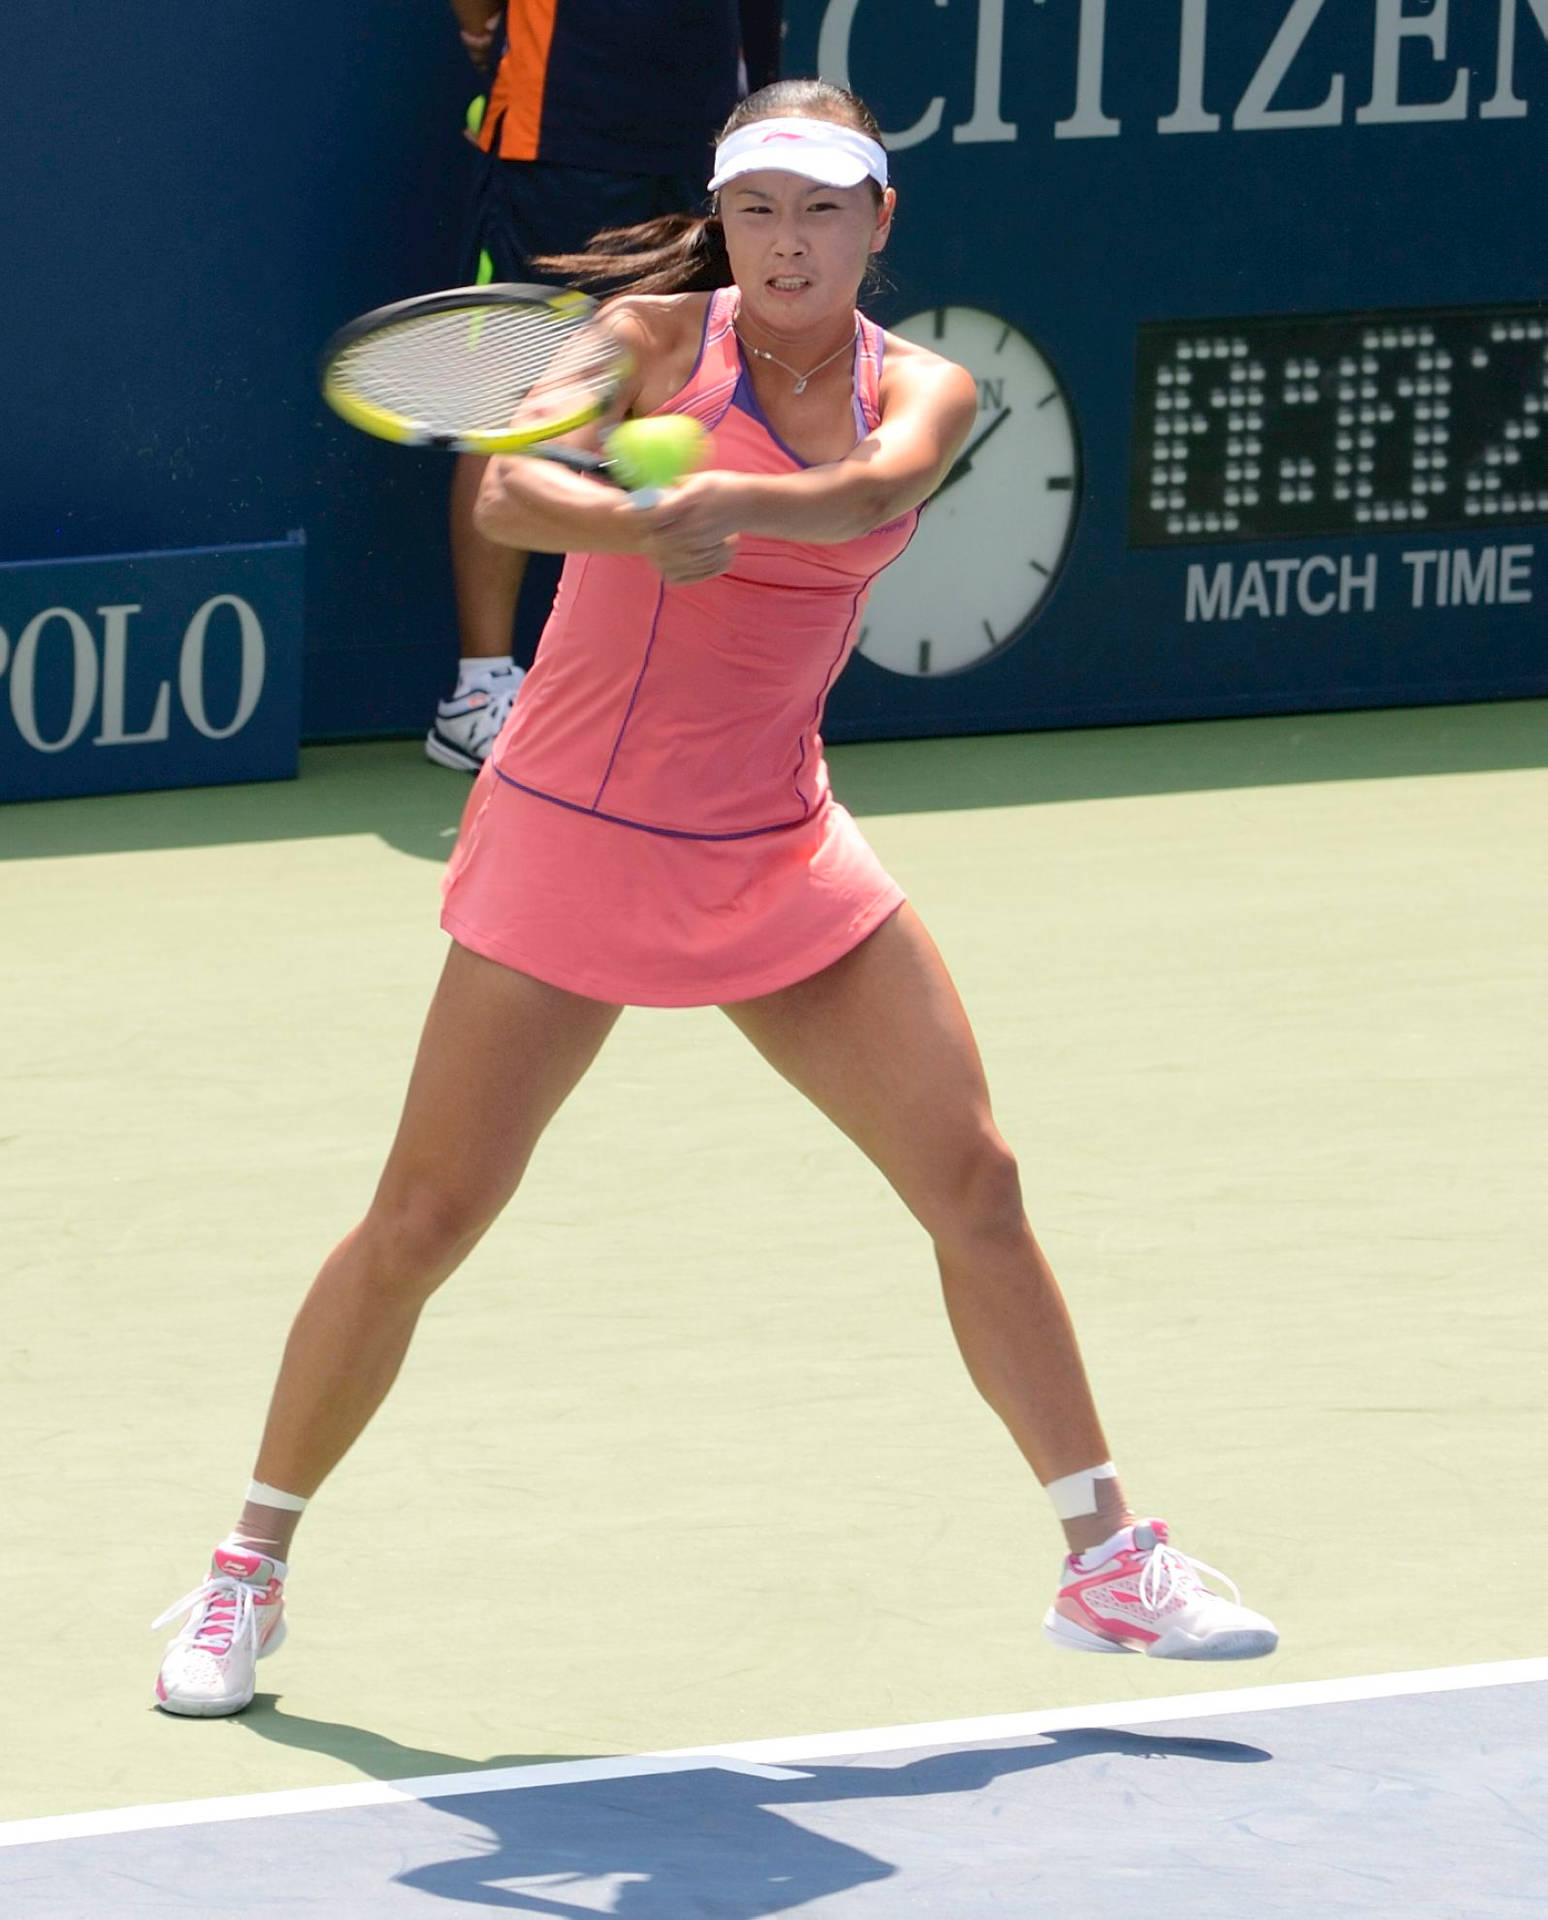 Caption: Chinese Tennis Star, Shuai Peng, in Action Wallpaper